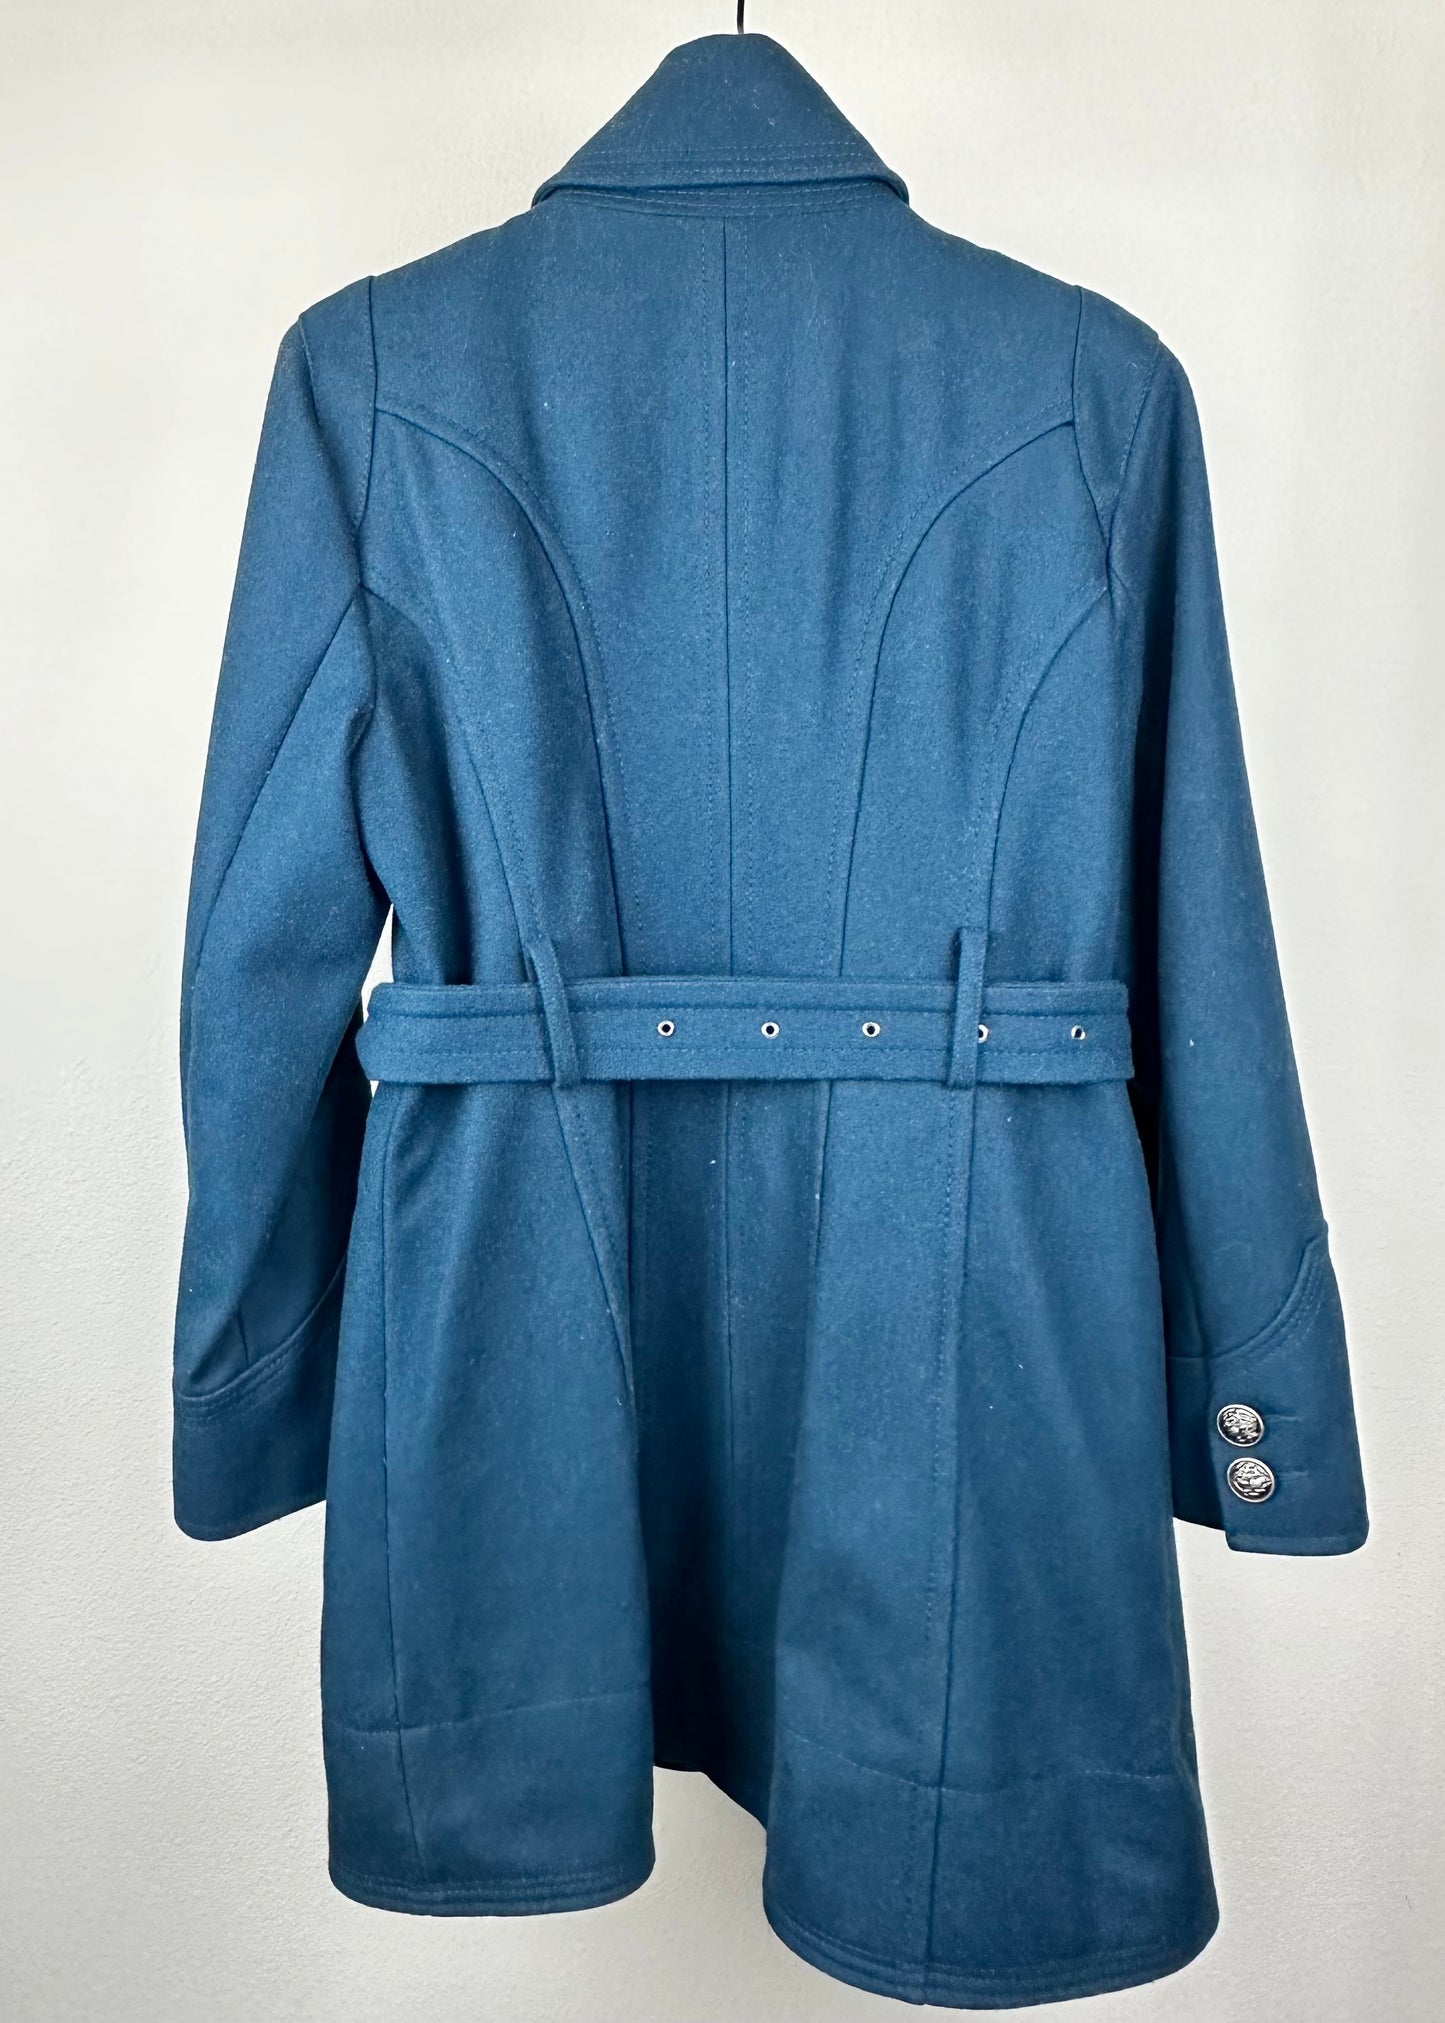 Women's Blue Coat by Worthington